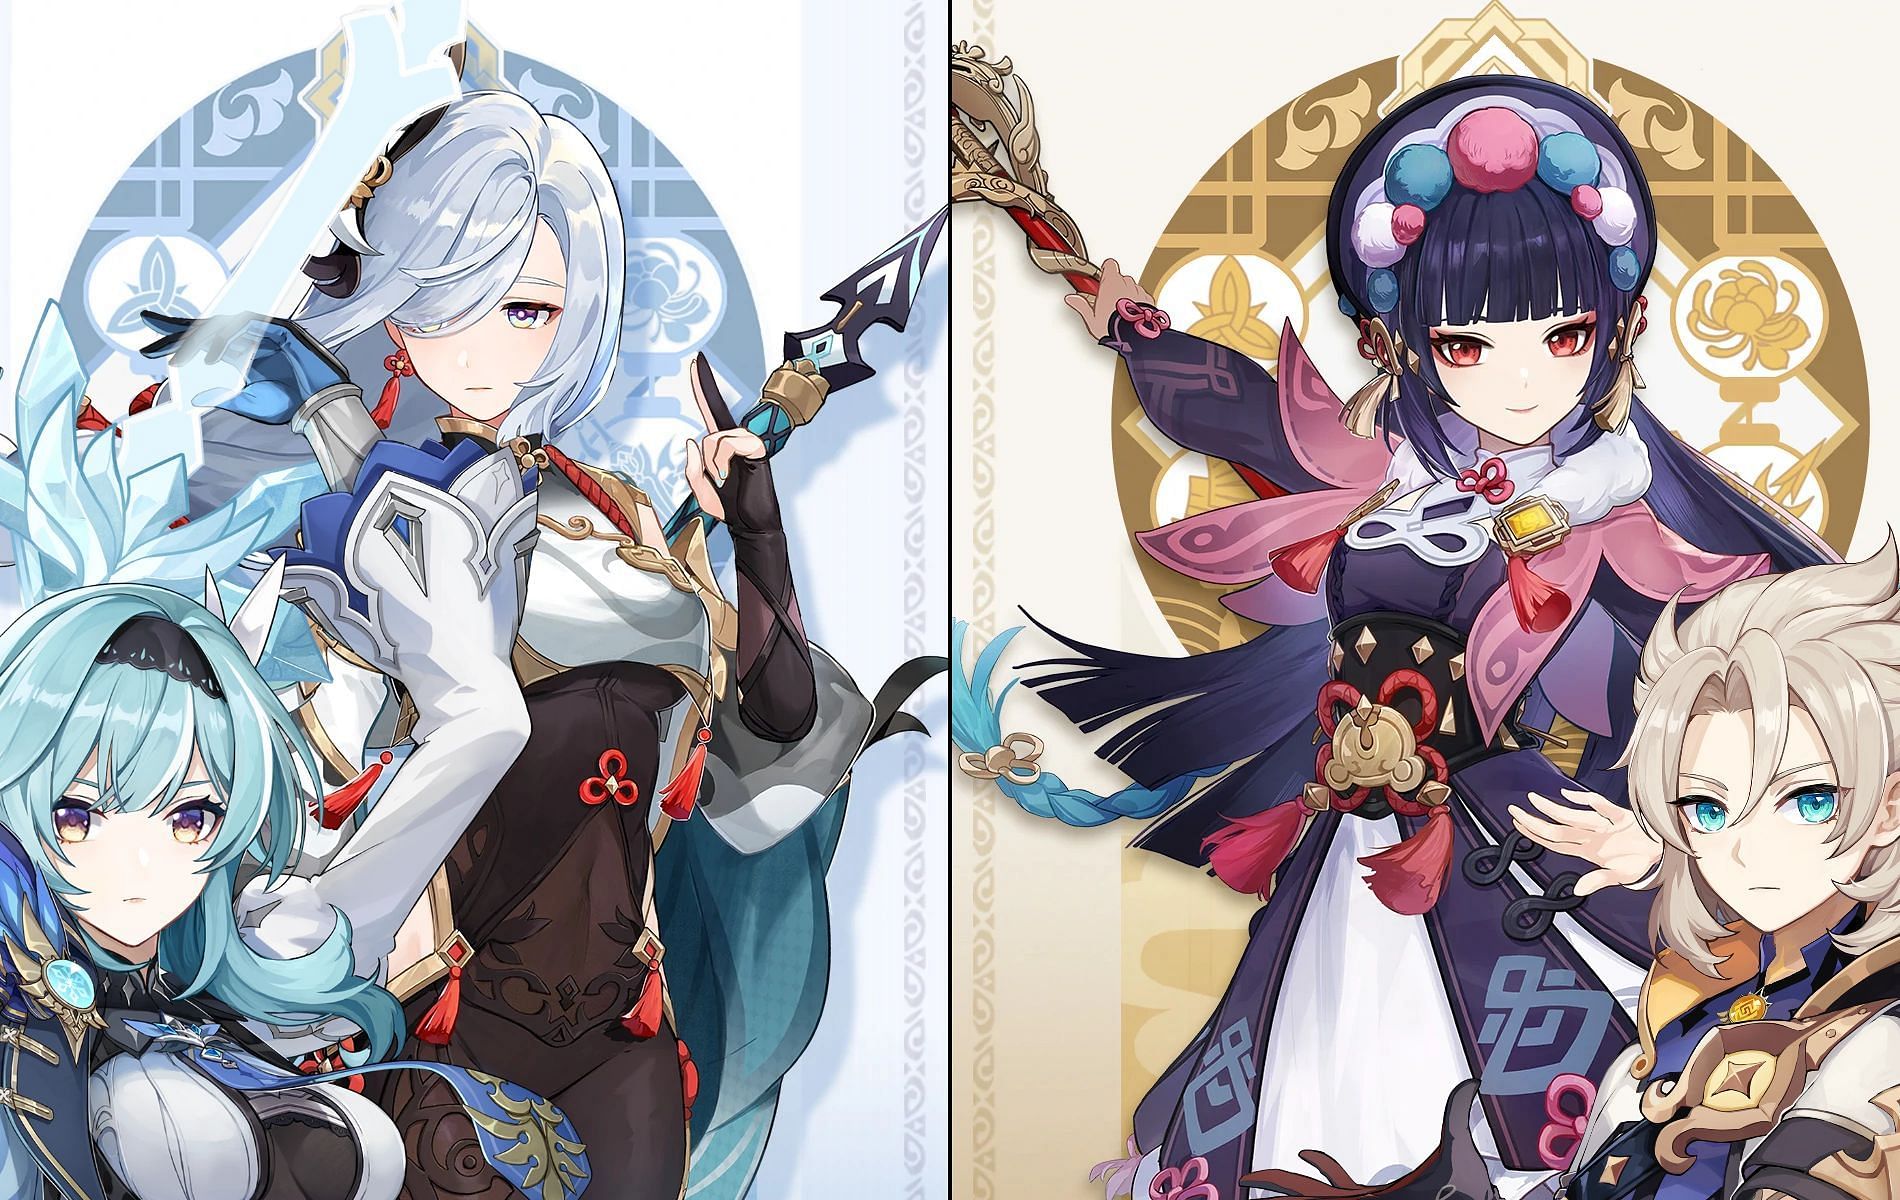 Some of the upcoming Genshin Impact characters (Image via Genshin Impact)